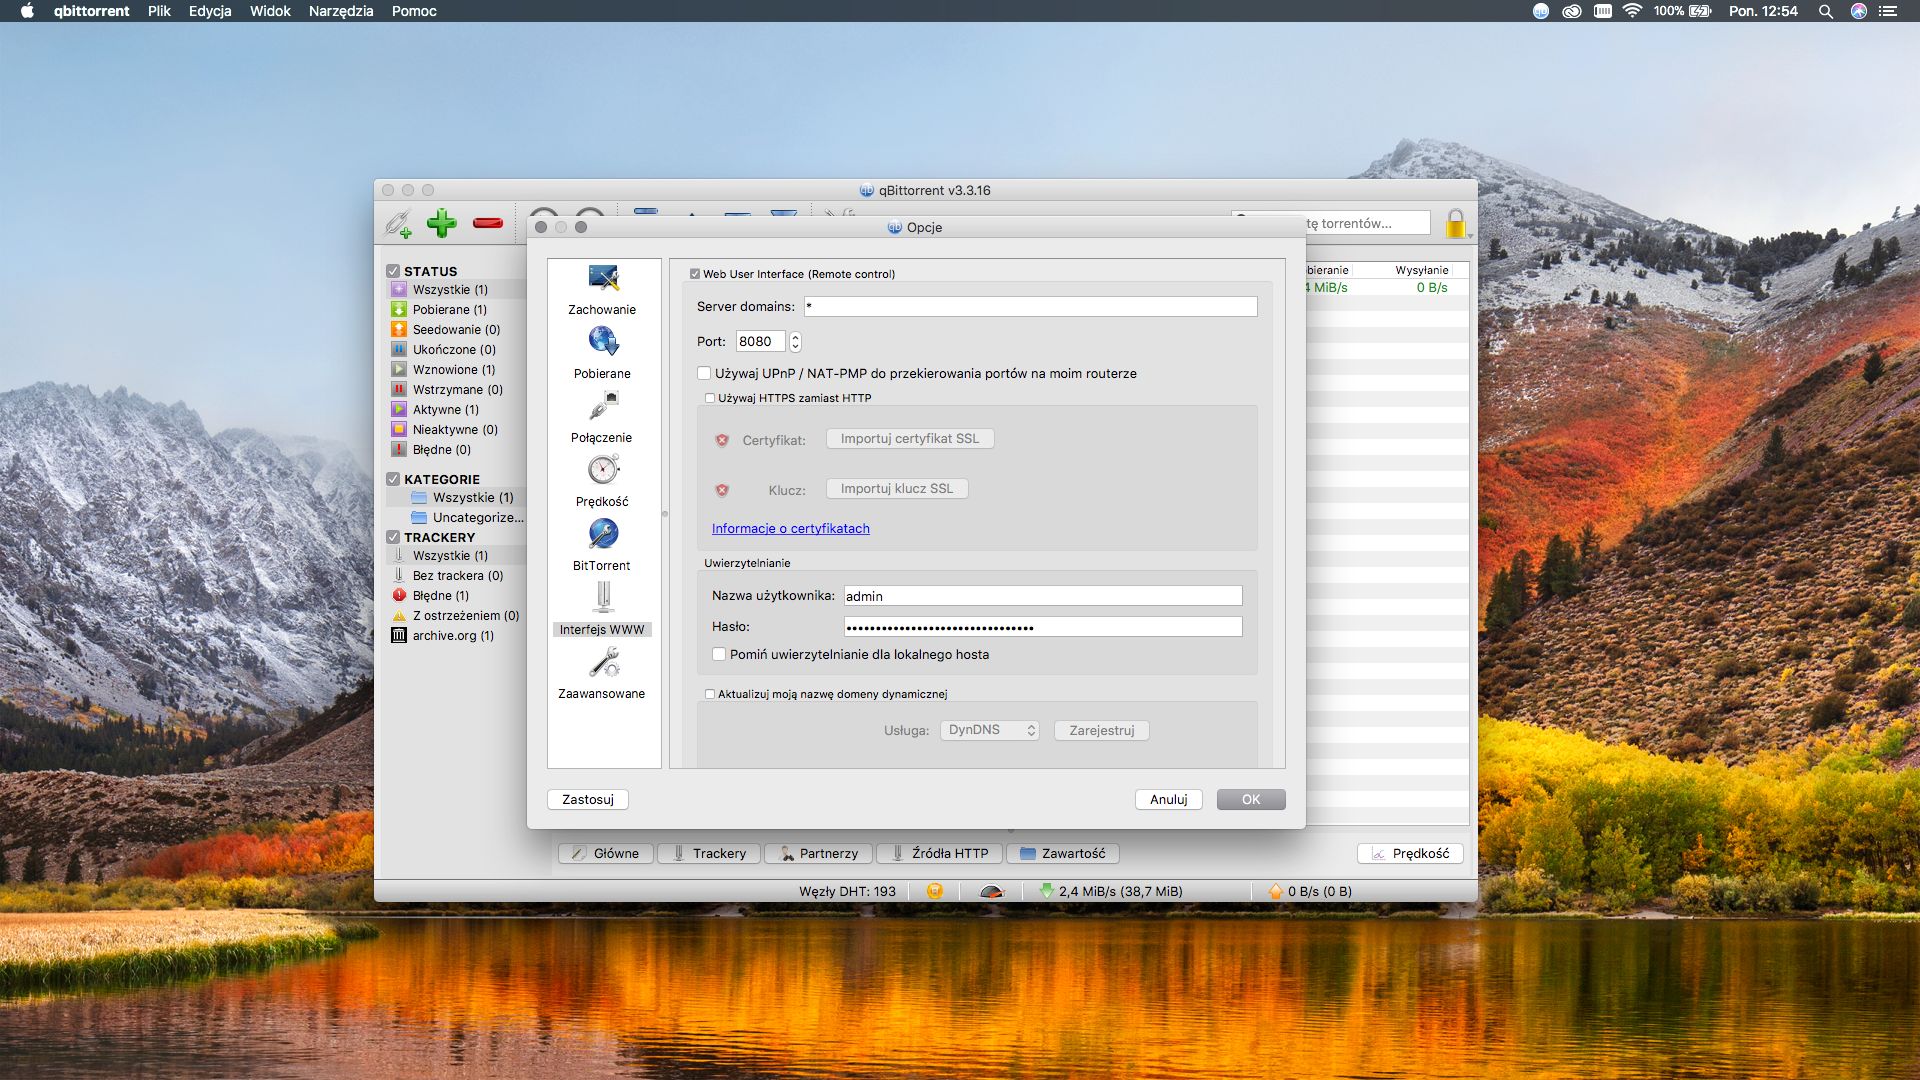 qBittorrent 4.5.4 instal the last version for windows